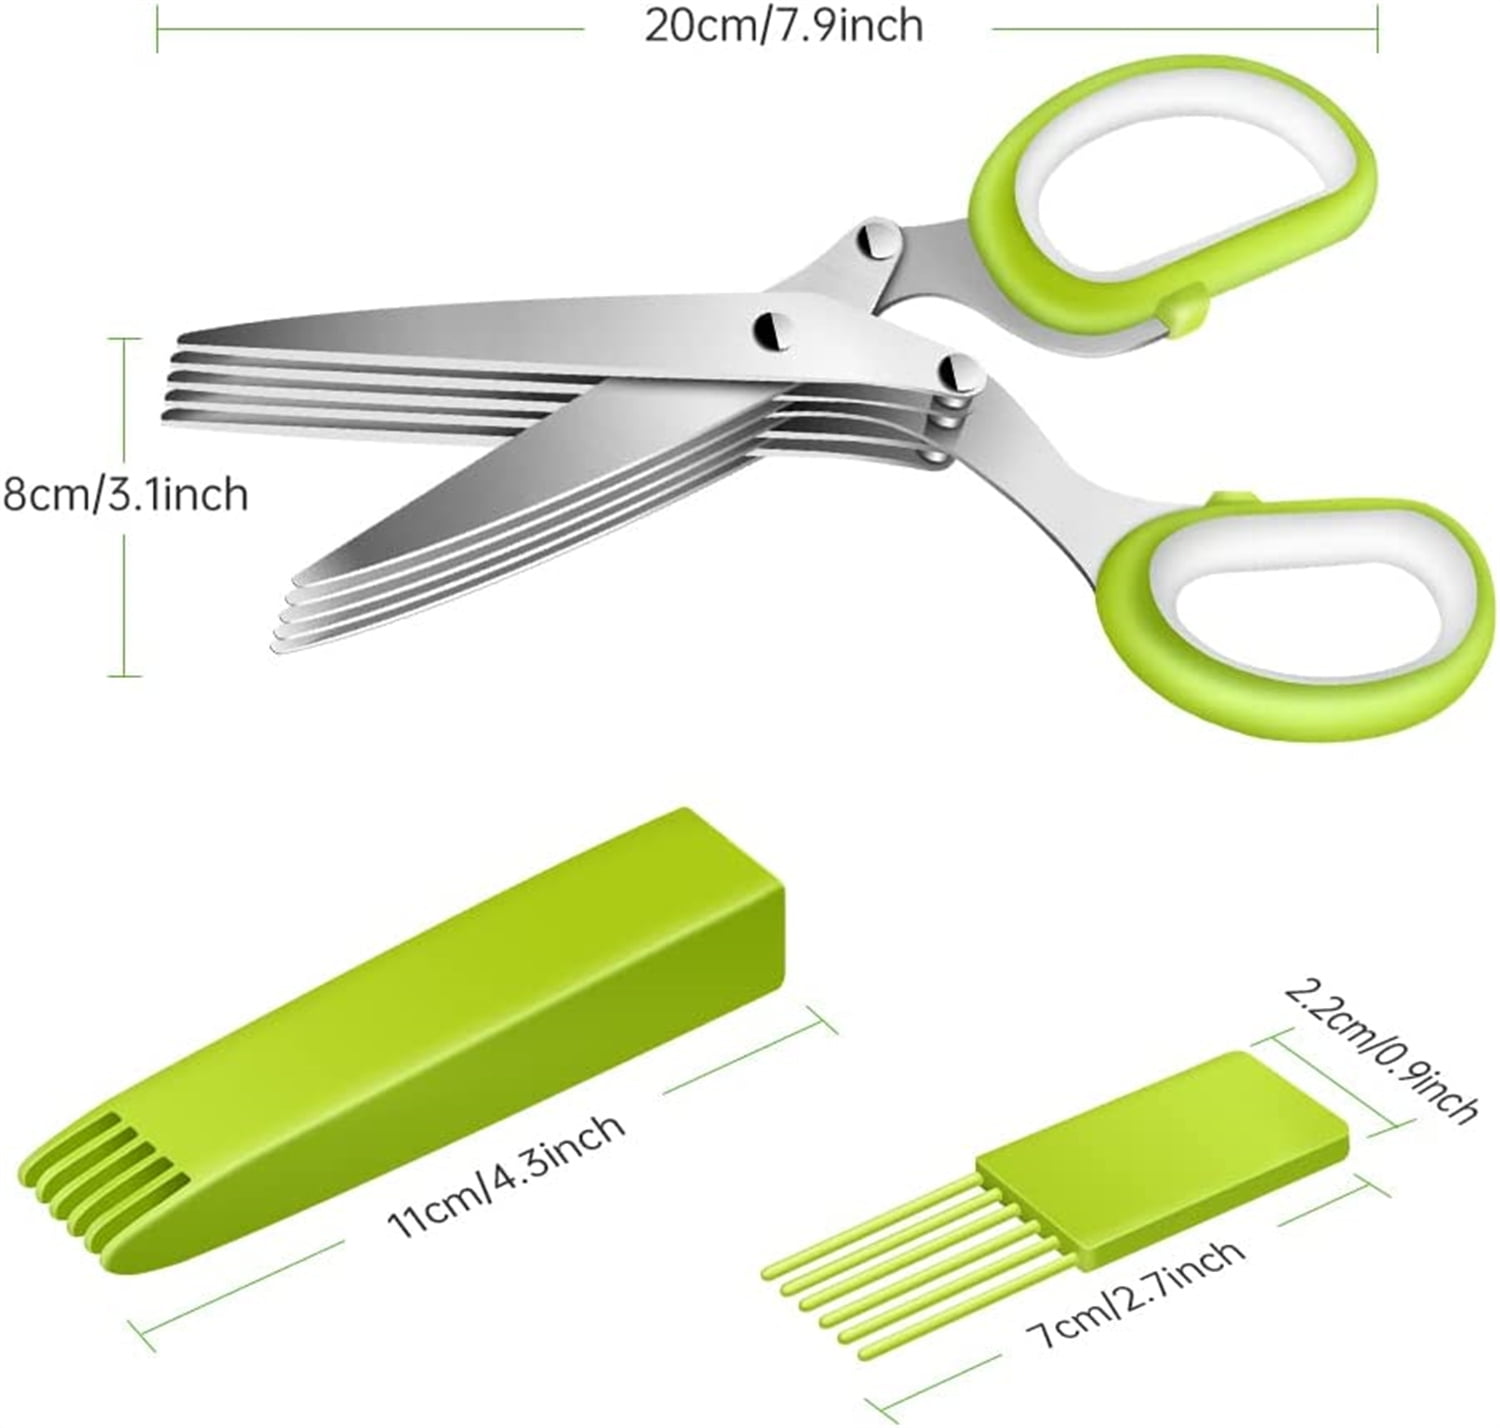 Veritable Herb scissors with comb - A-ACC-CIS-0077-S